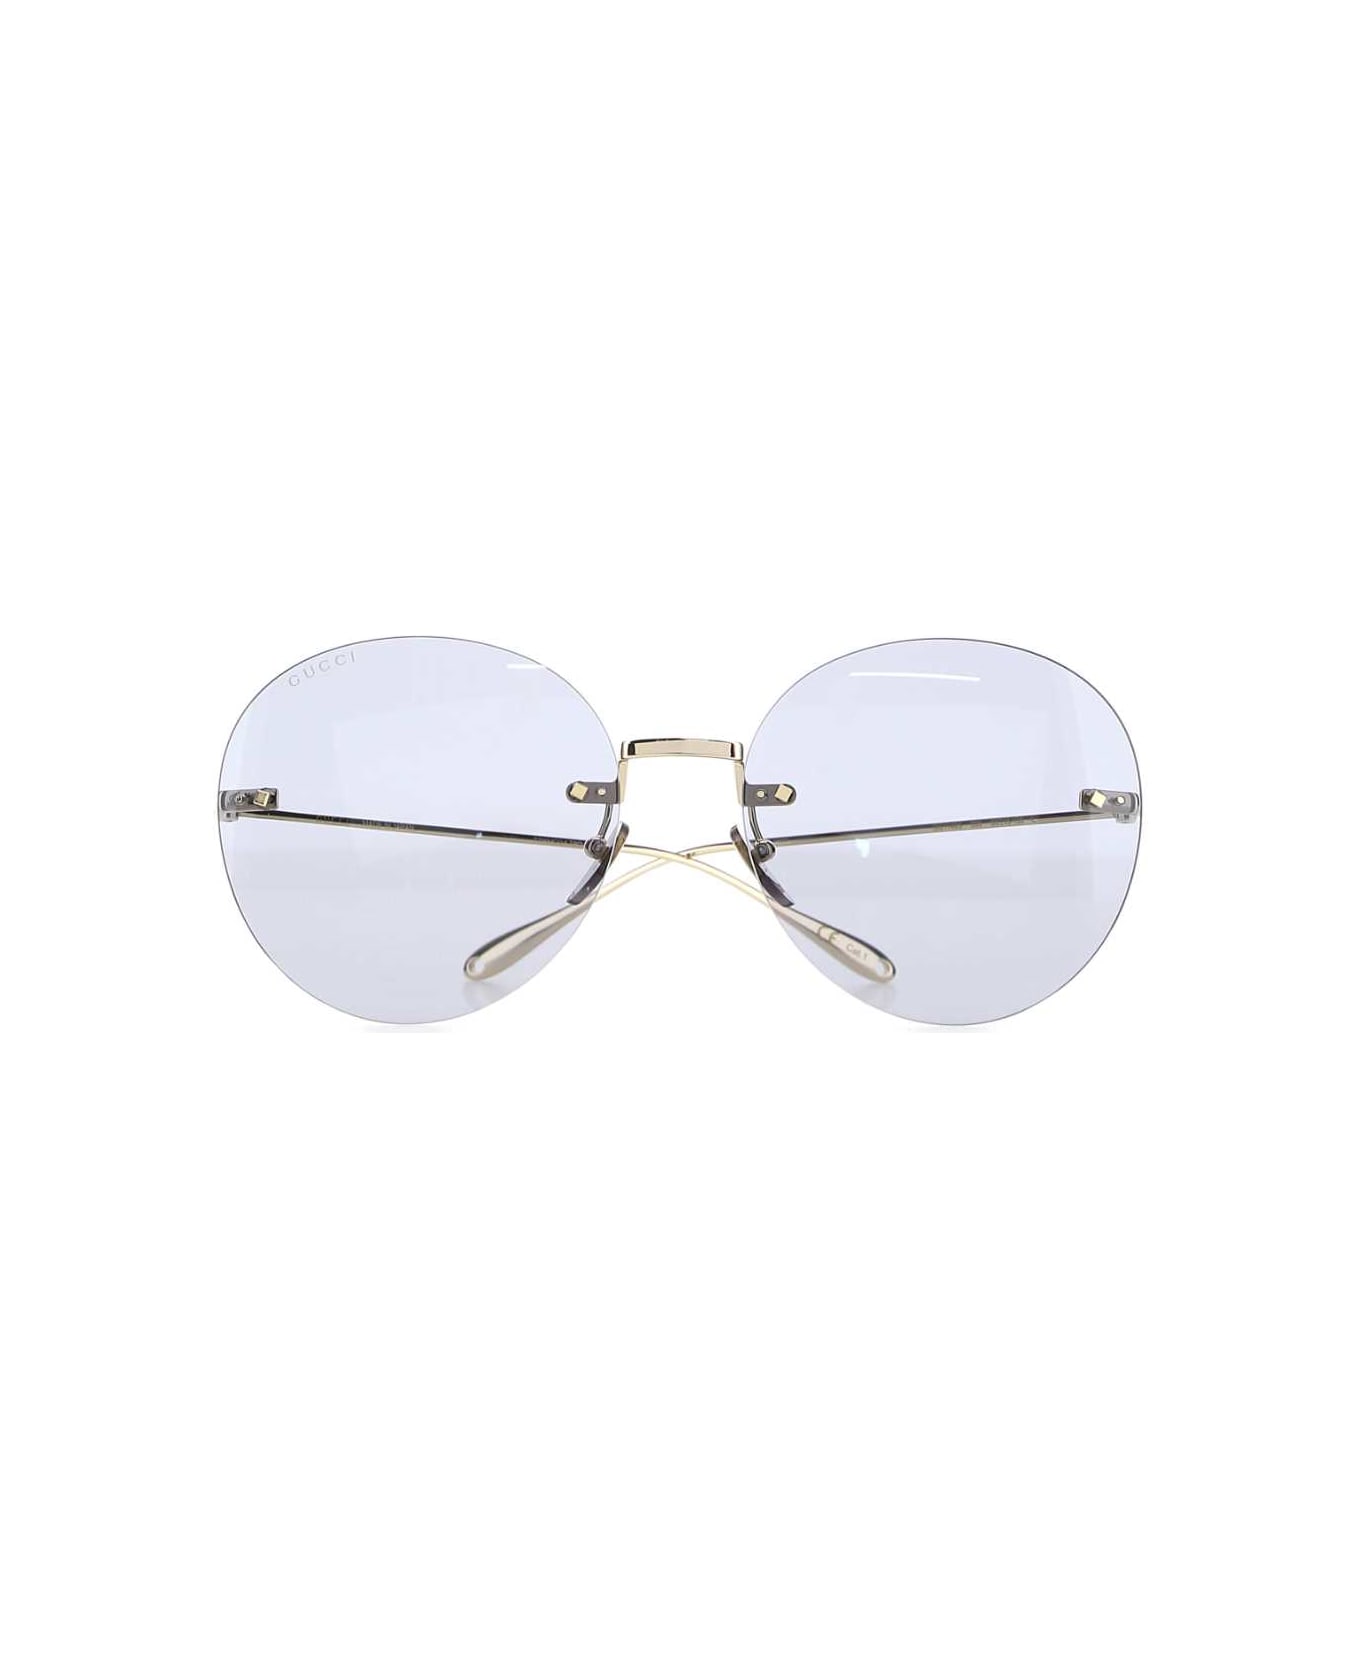 Gucci Gold Metal Sunglasses - 8053